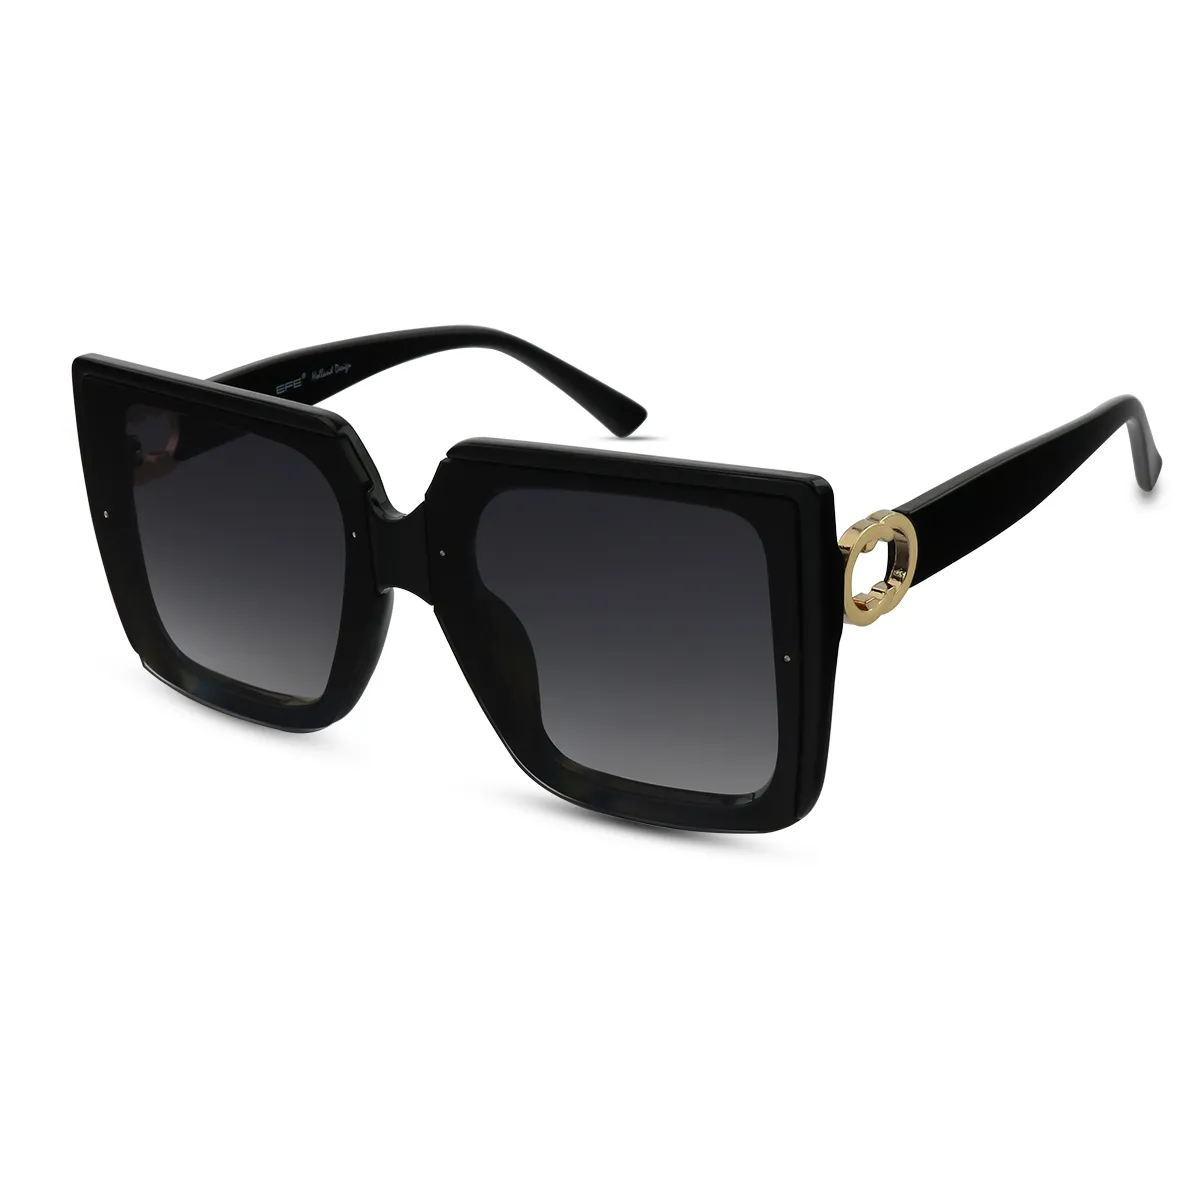 Tess - Square Black Sunglasses for Women